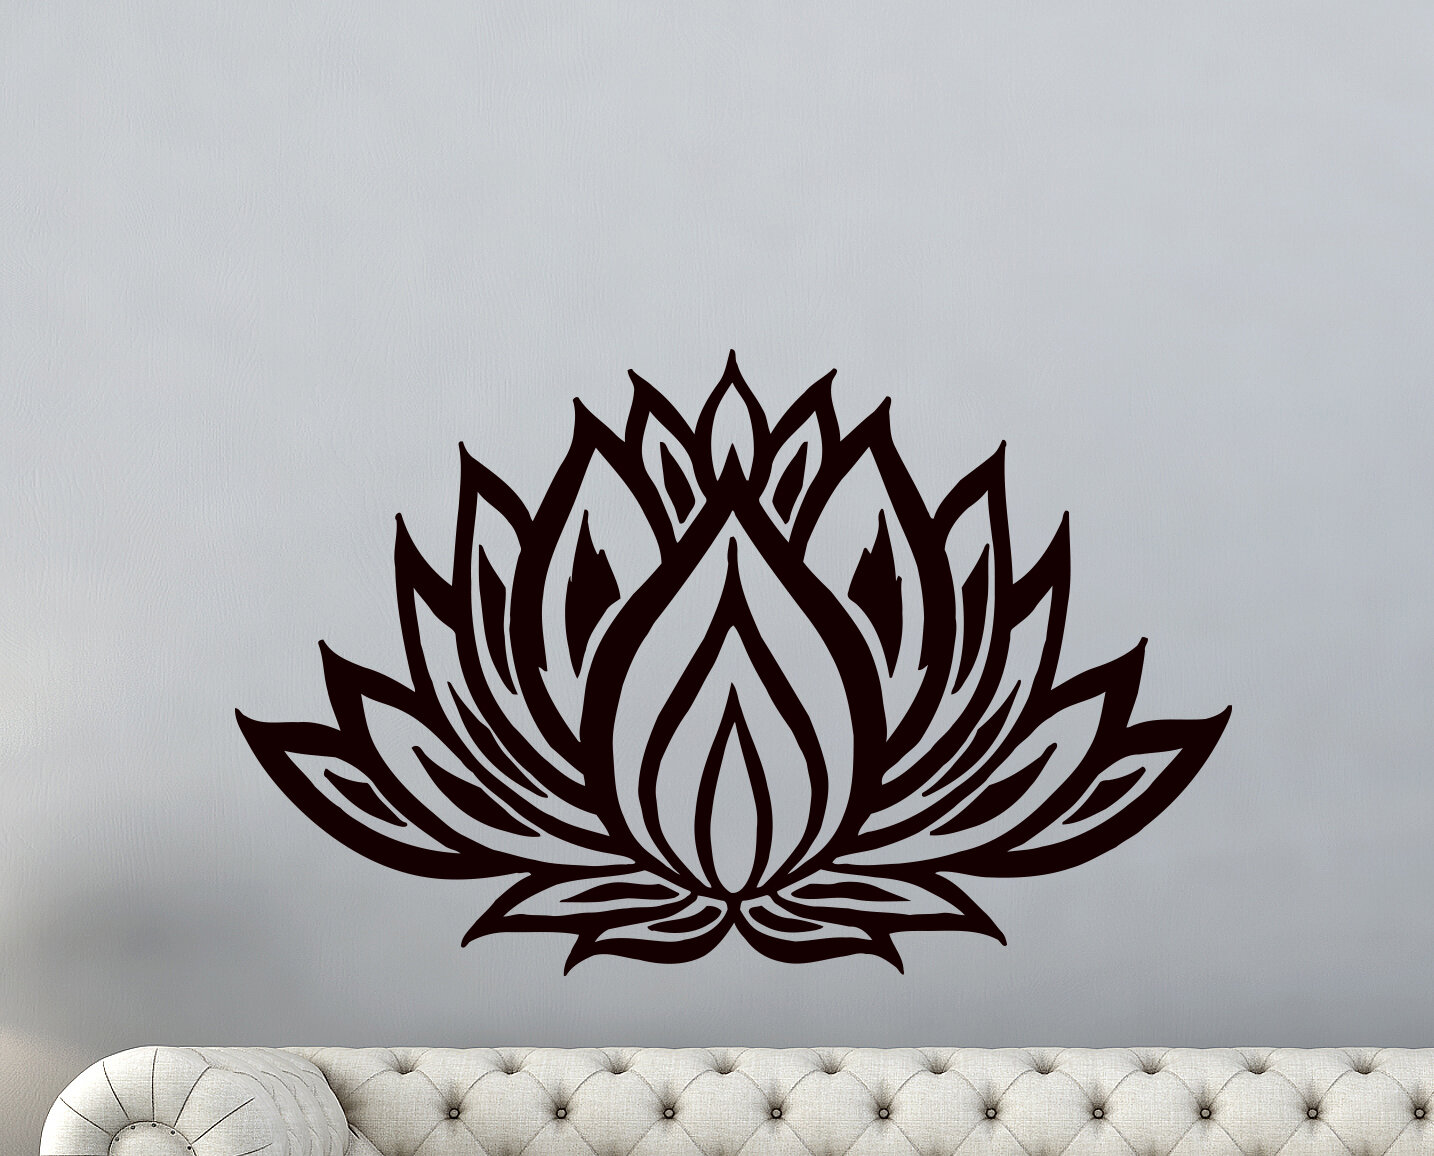 Vinyl Wall Decal Lotus Flower Ornament Yoga Studio Decor Stickers 3967ig